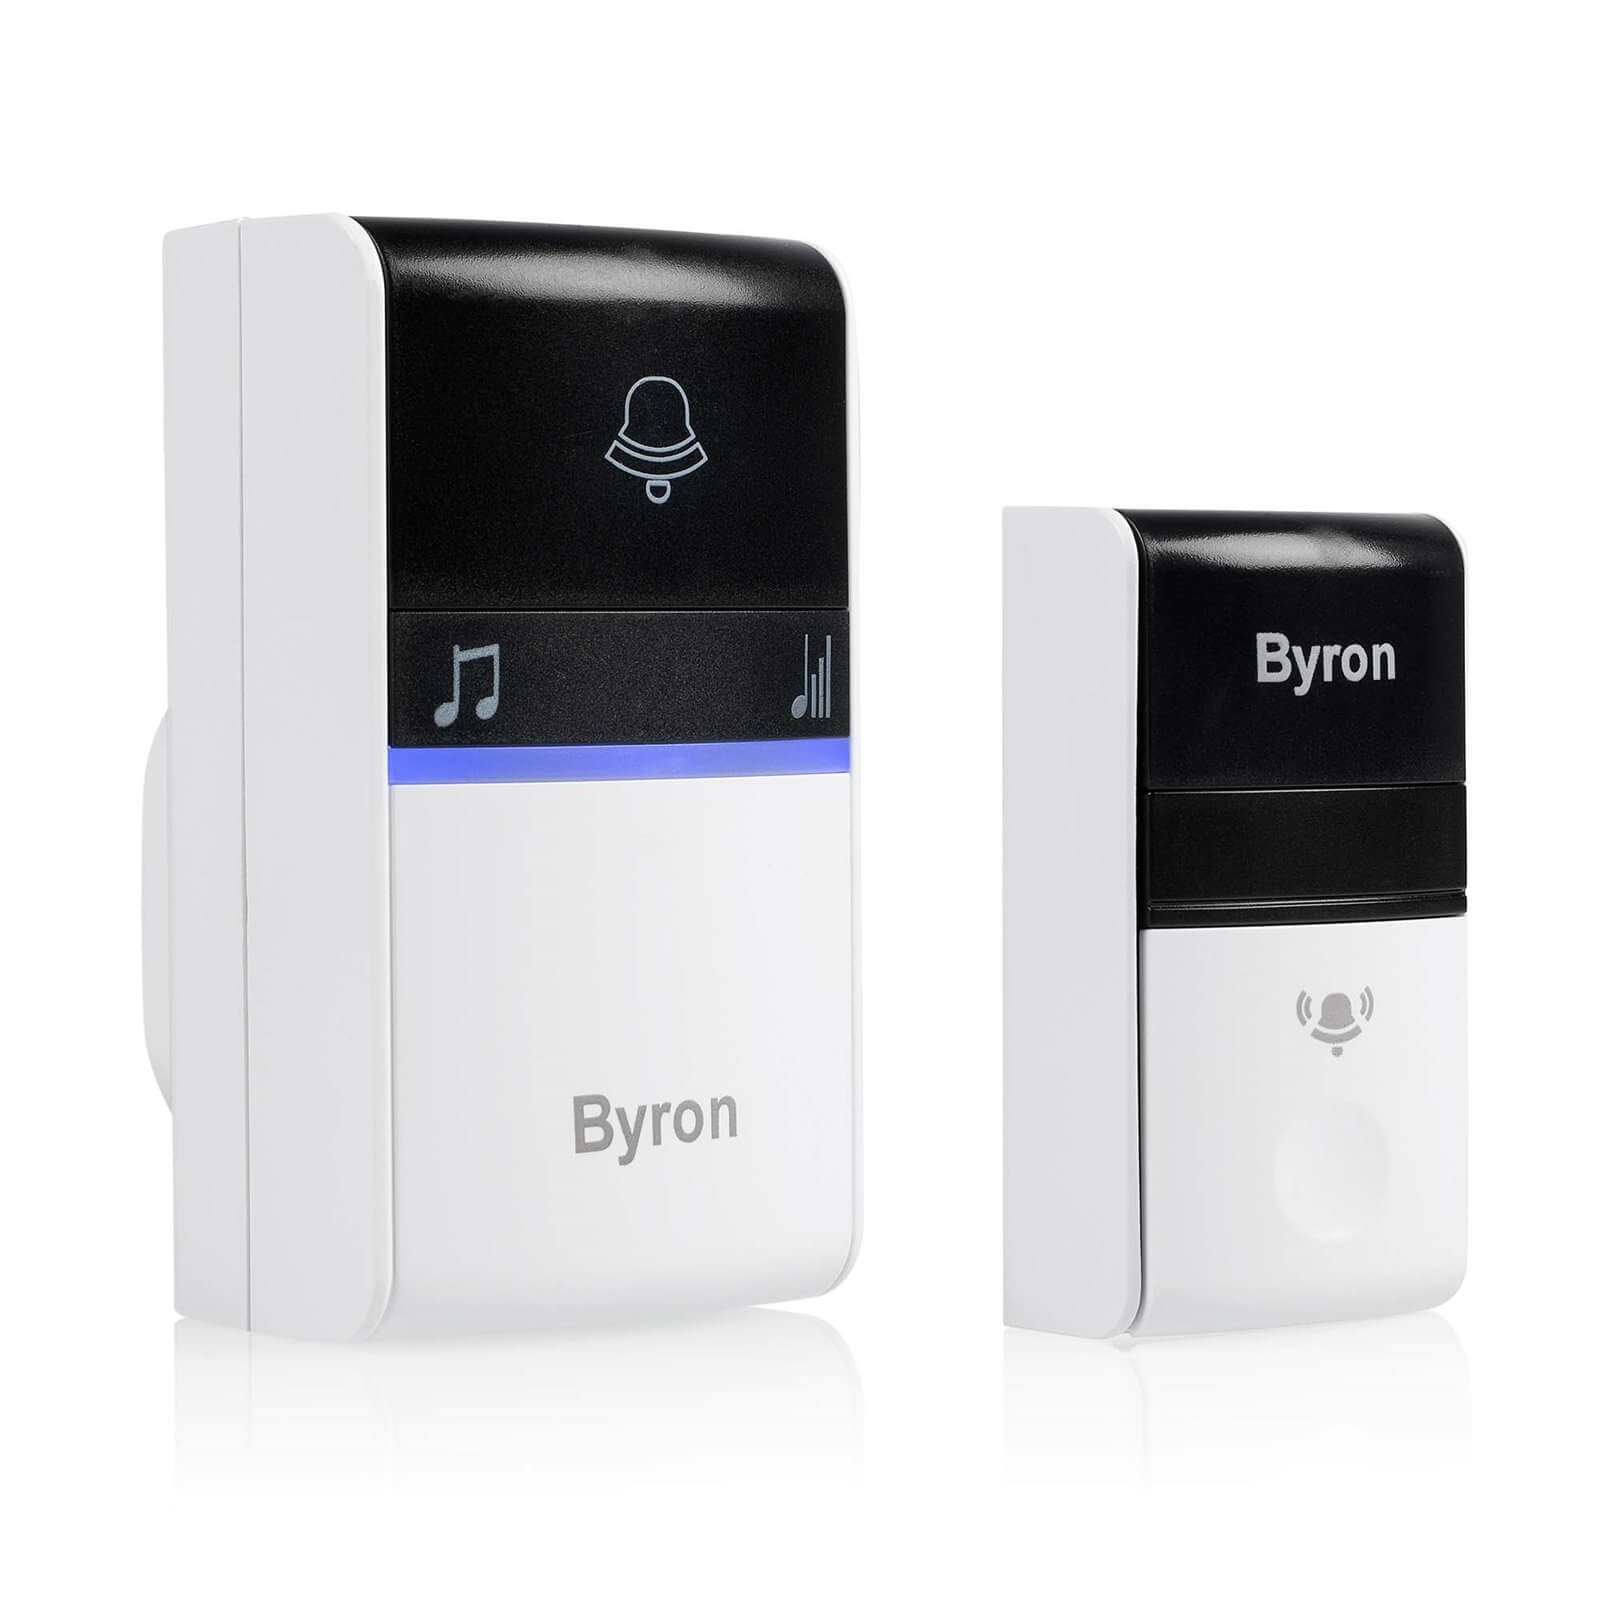 Byron 23415UK 100m Plug-in Wireless Kinetic Doorbell set